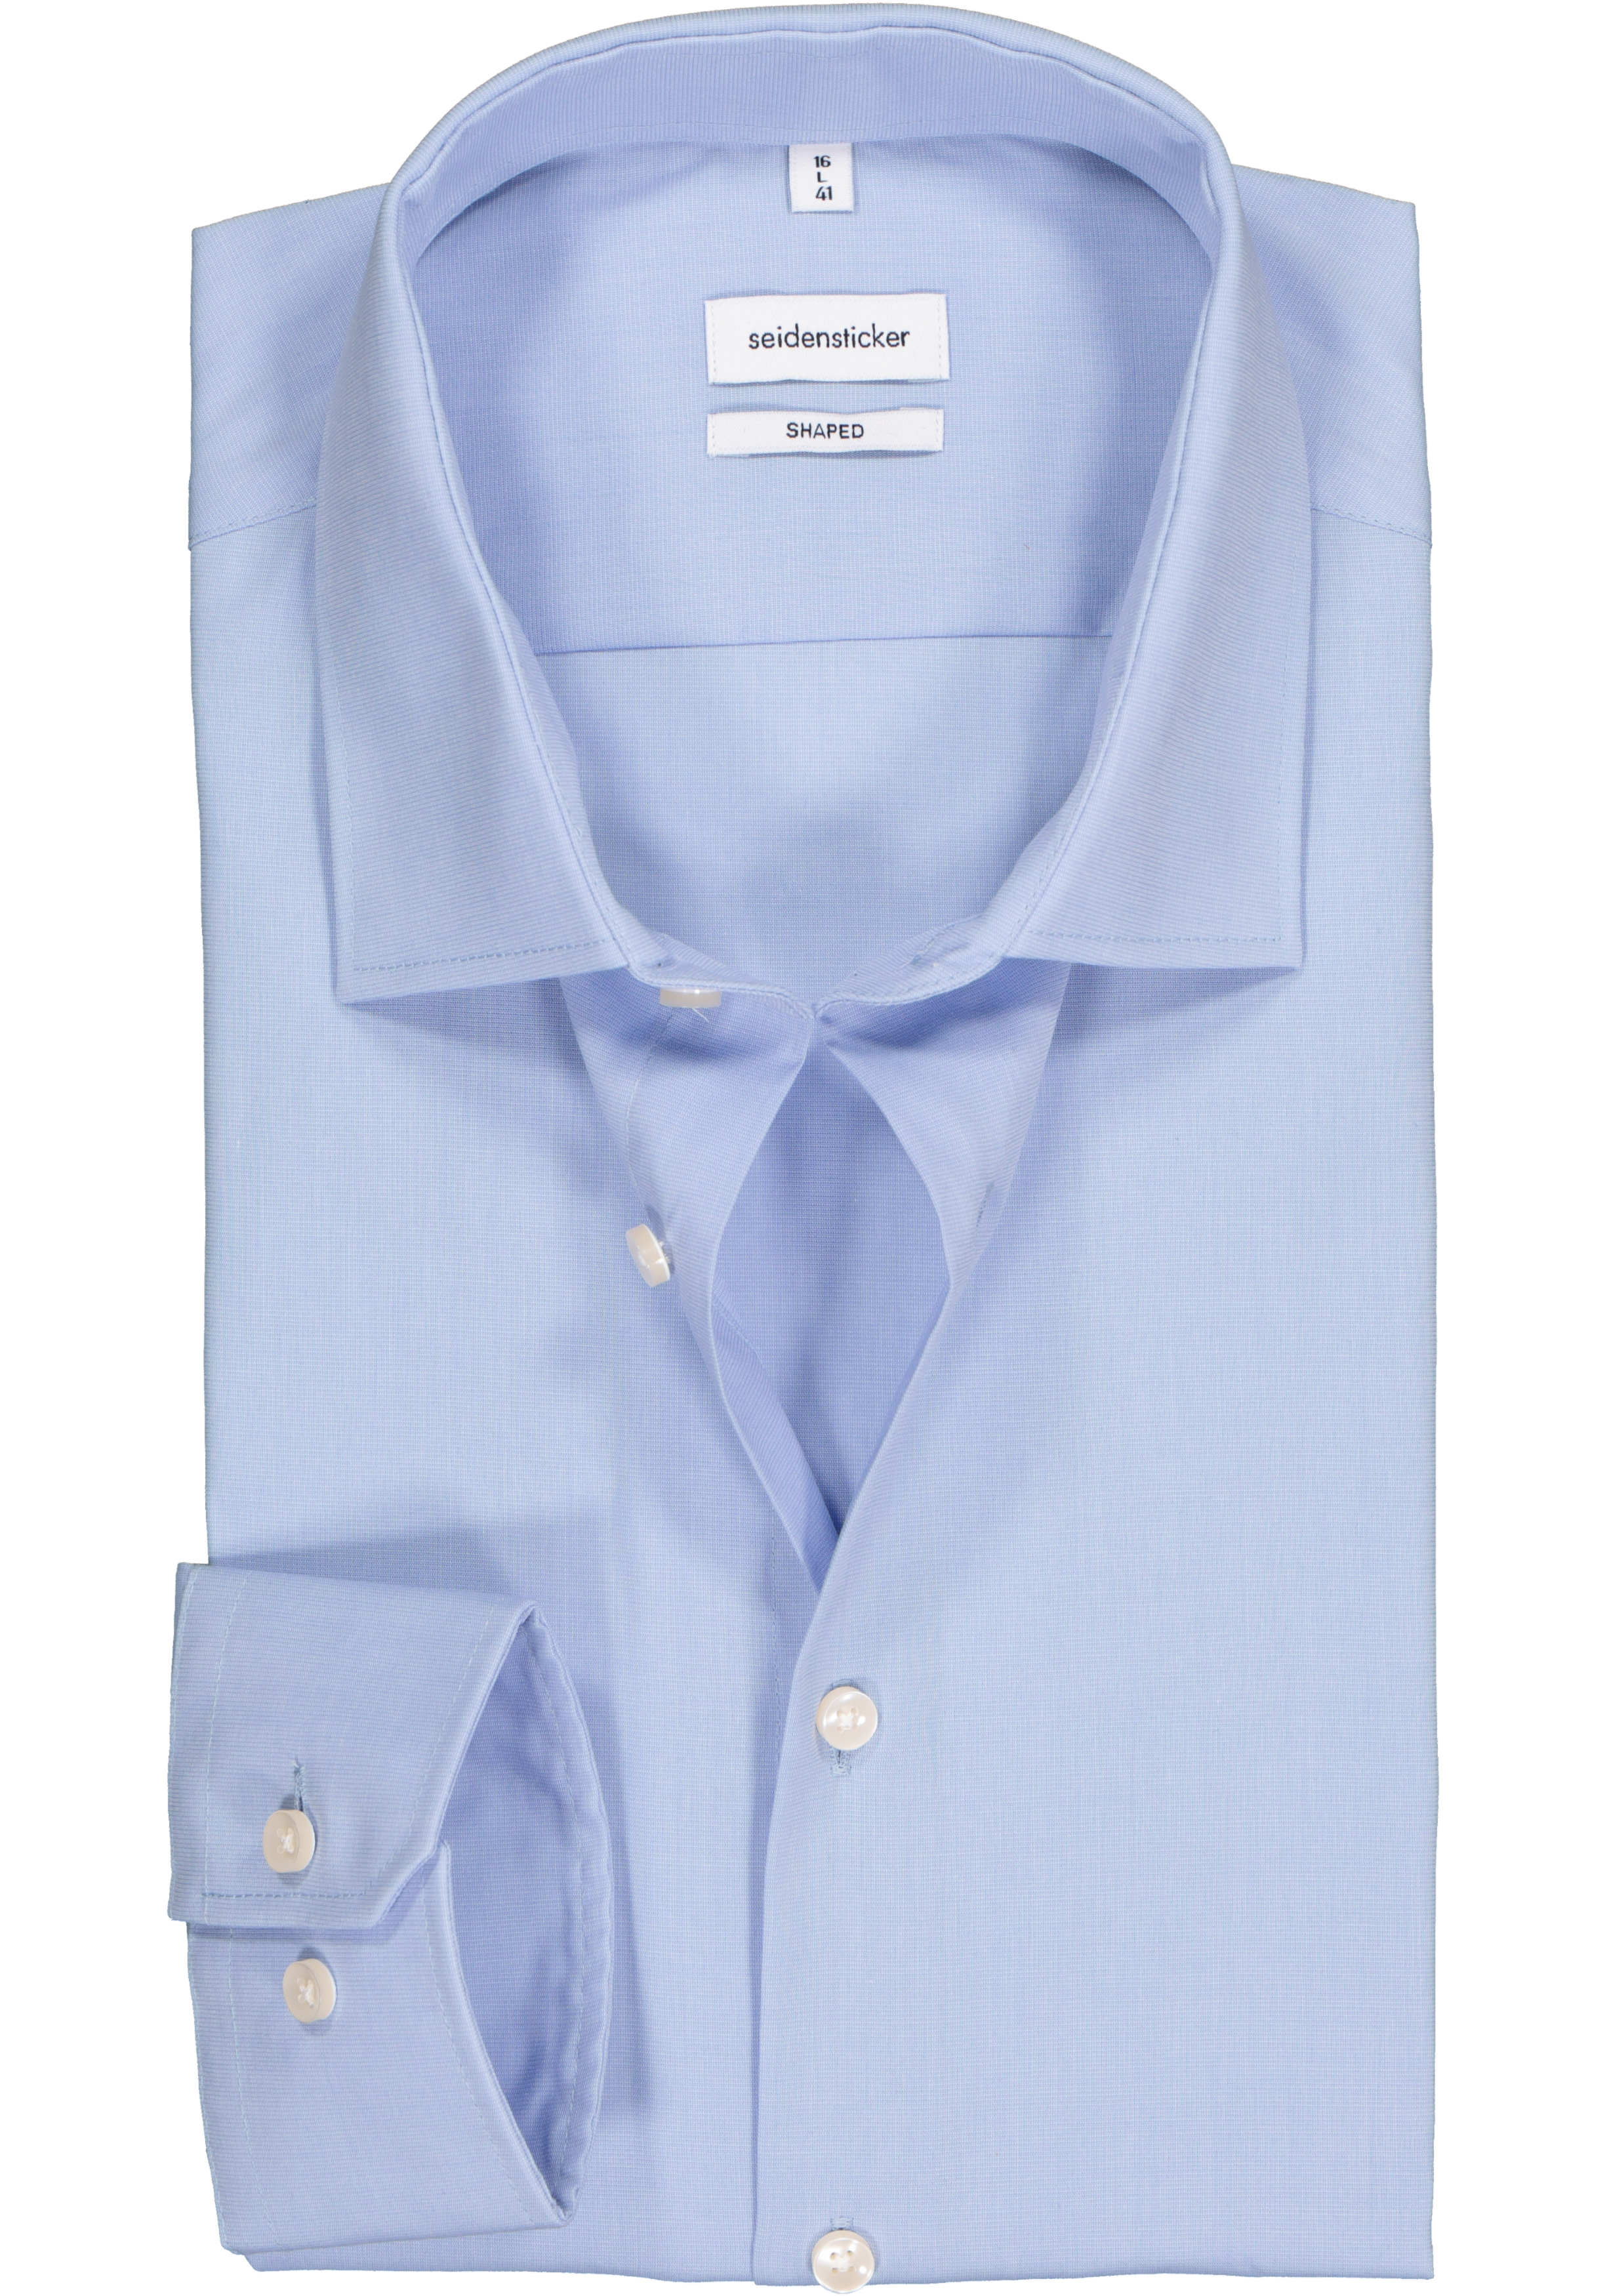 Seidensticker shaped fit overhemd, mouwlengte 7, fil a fil, lichtblauw